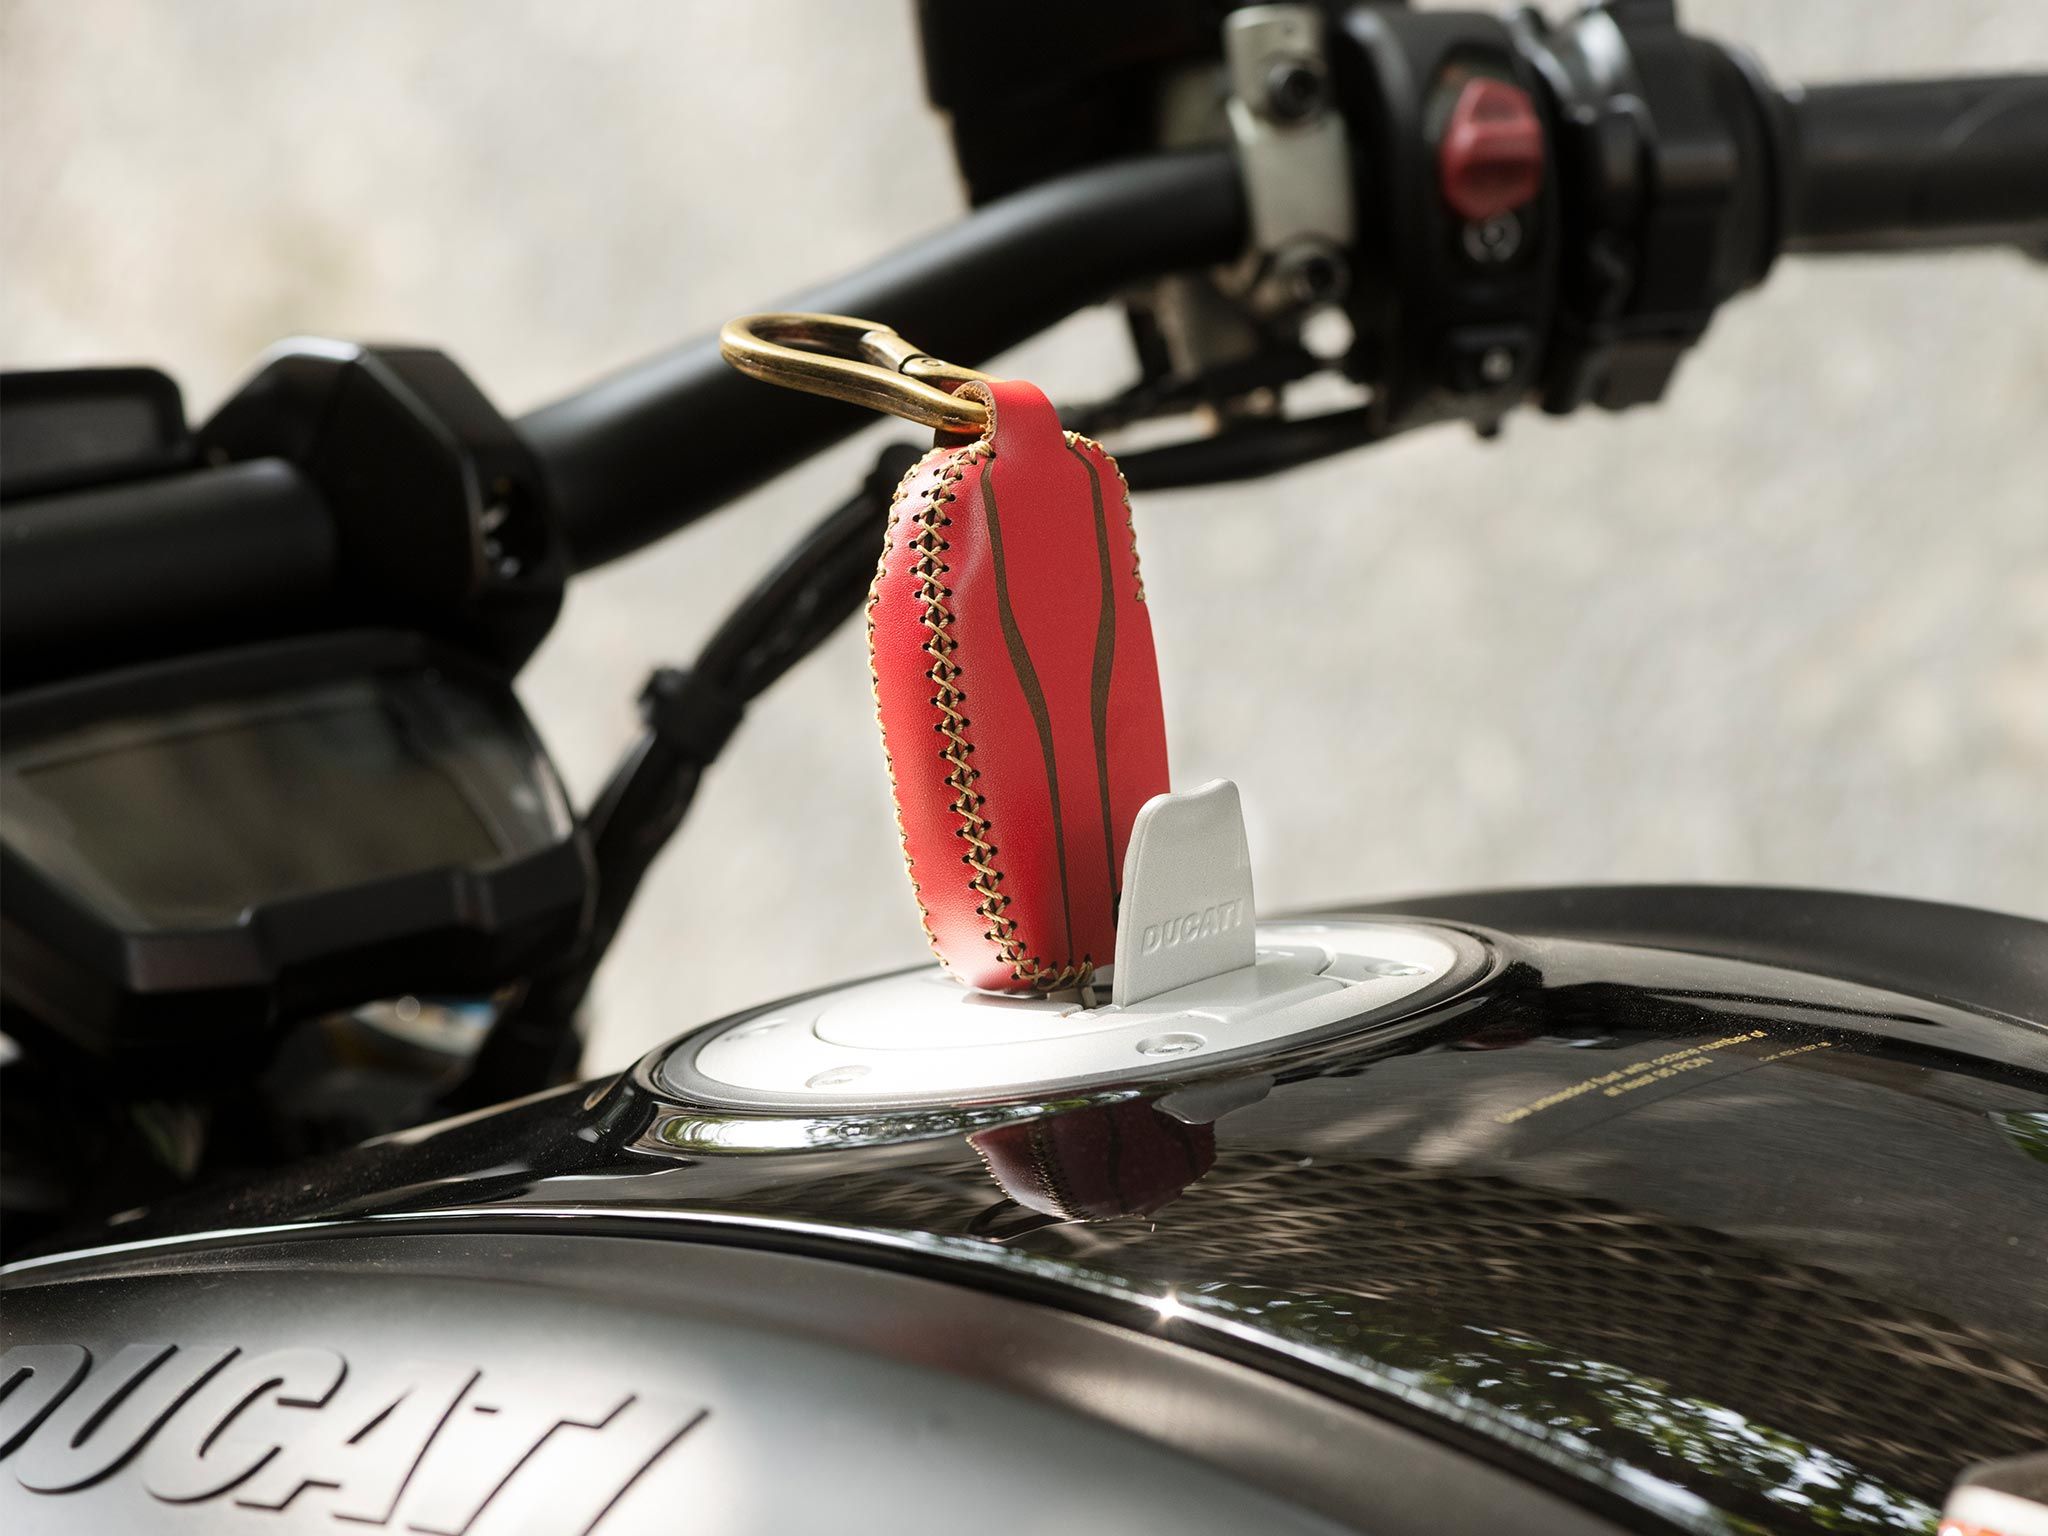  Ducati Diavel 1260S - Bao da chìa khóa (móc carabiner) 